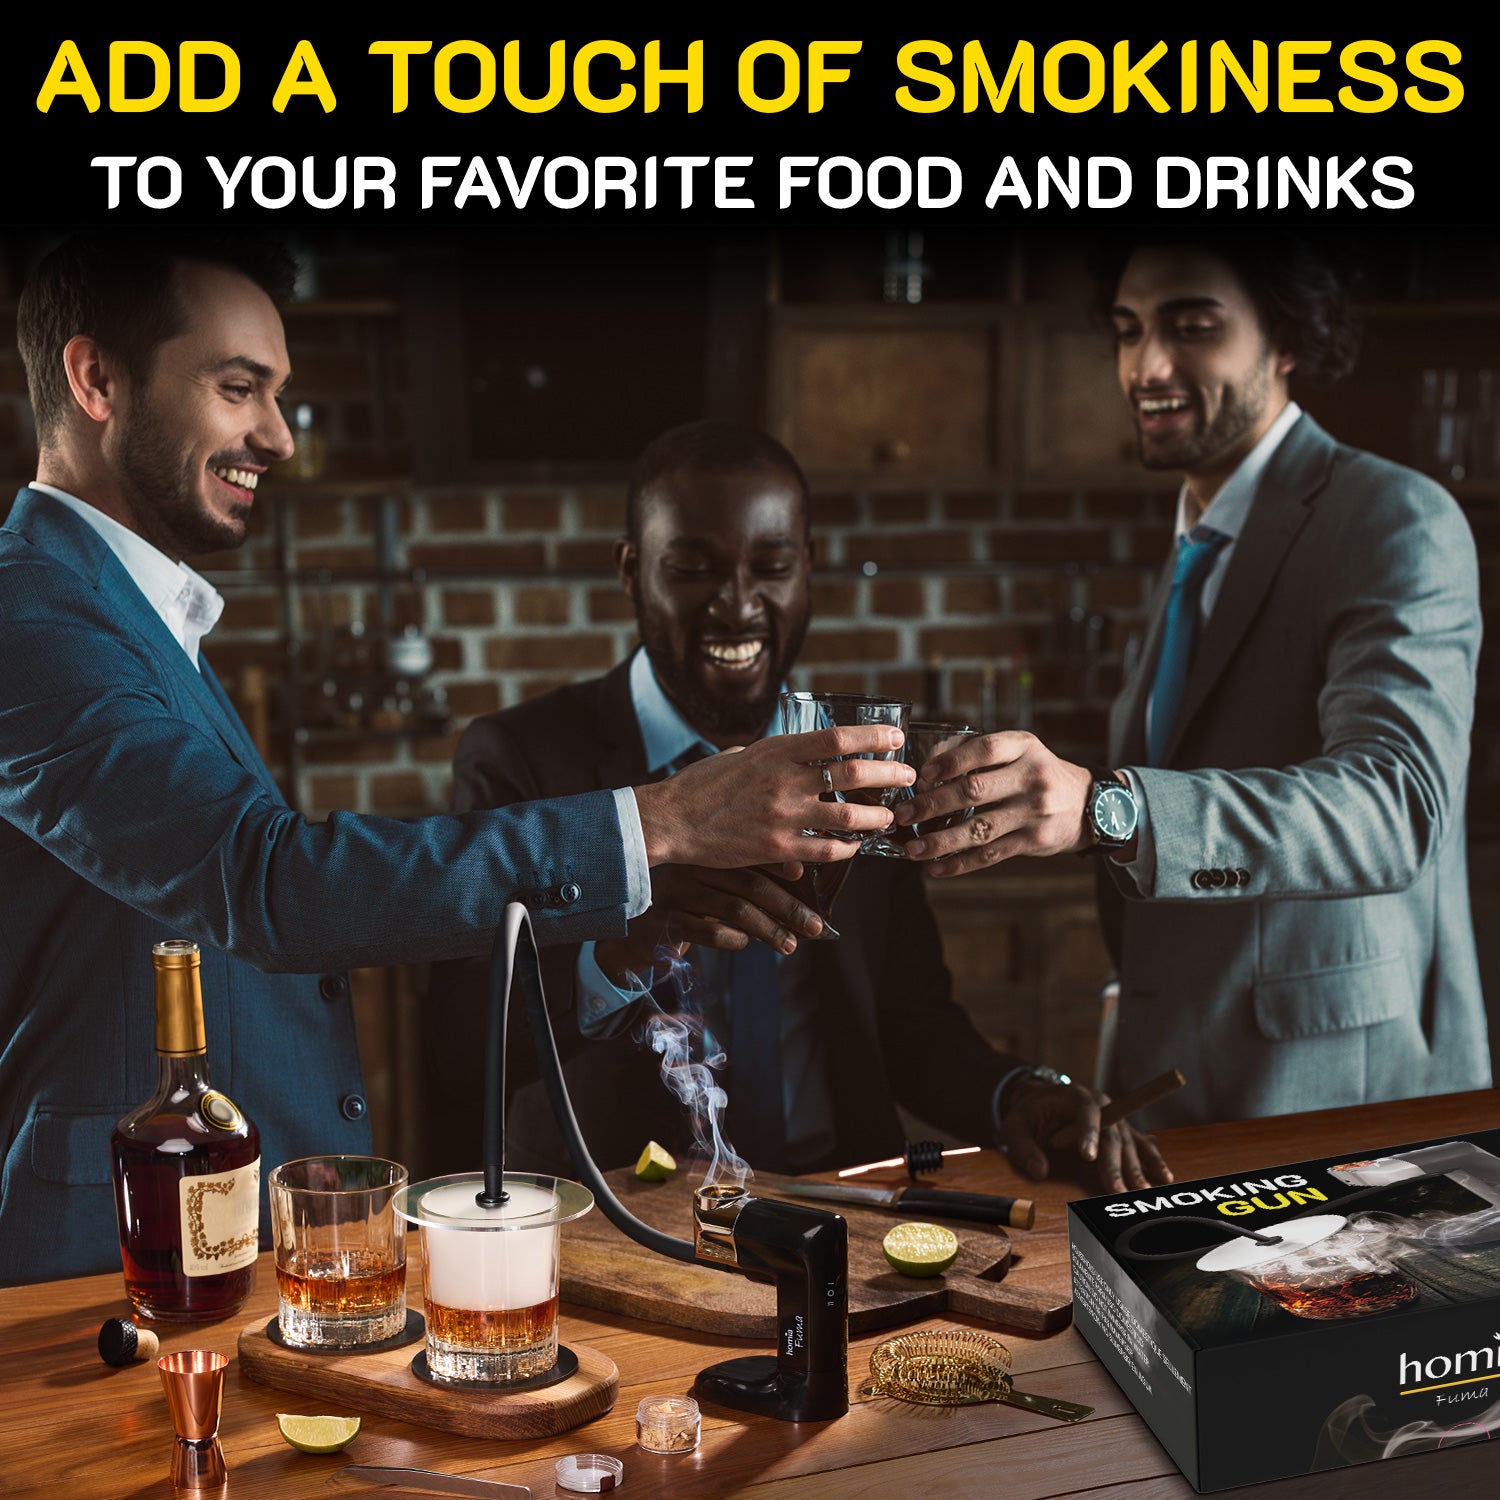 Homia - Fuma Smoking Gun Accessory Set 1 – HomiaStore